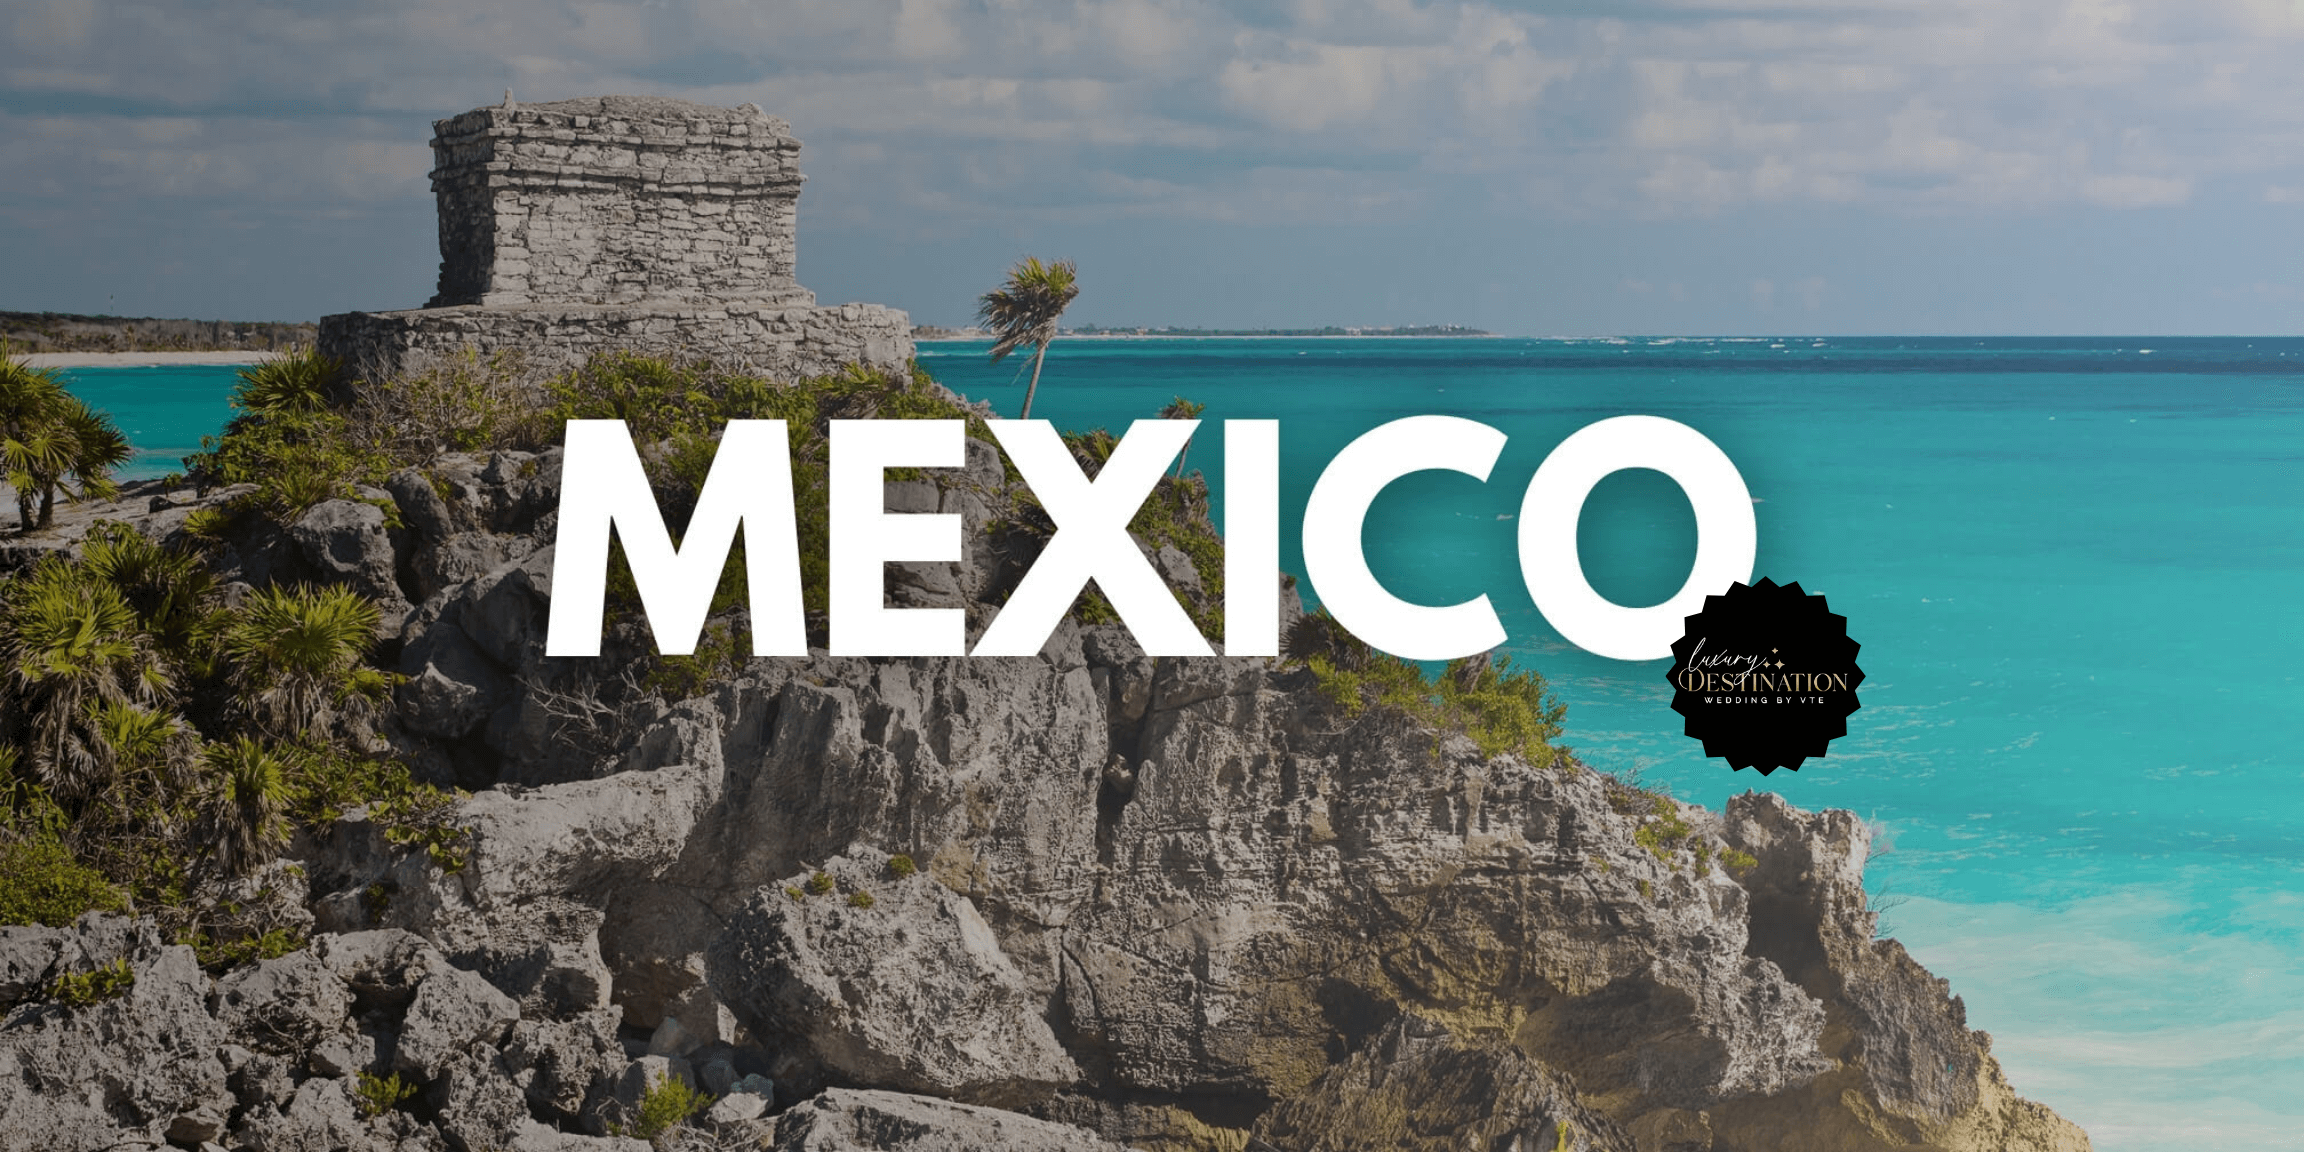 Mexico Wedding Destination Agency